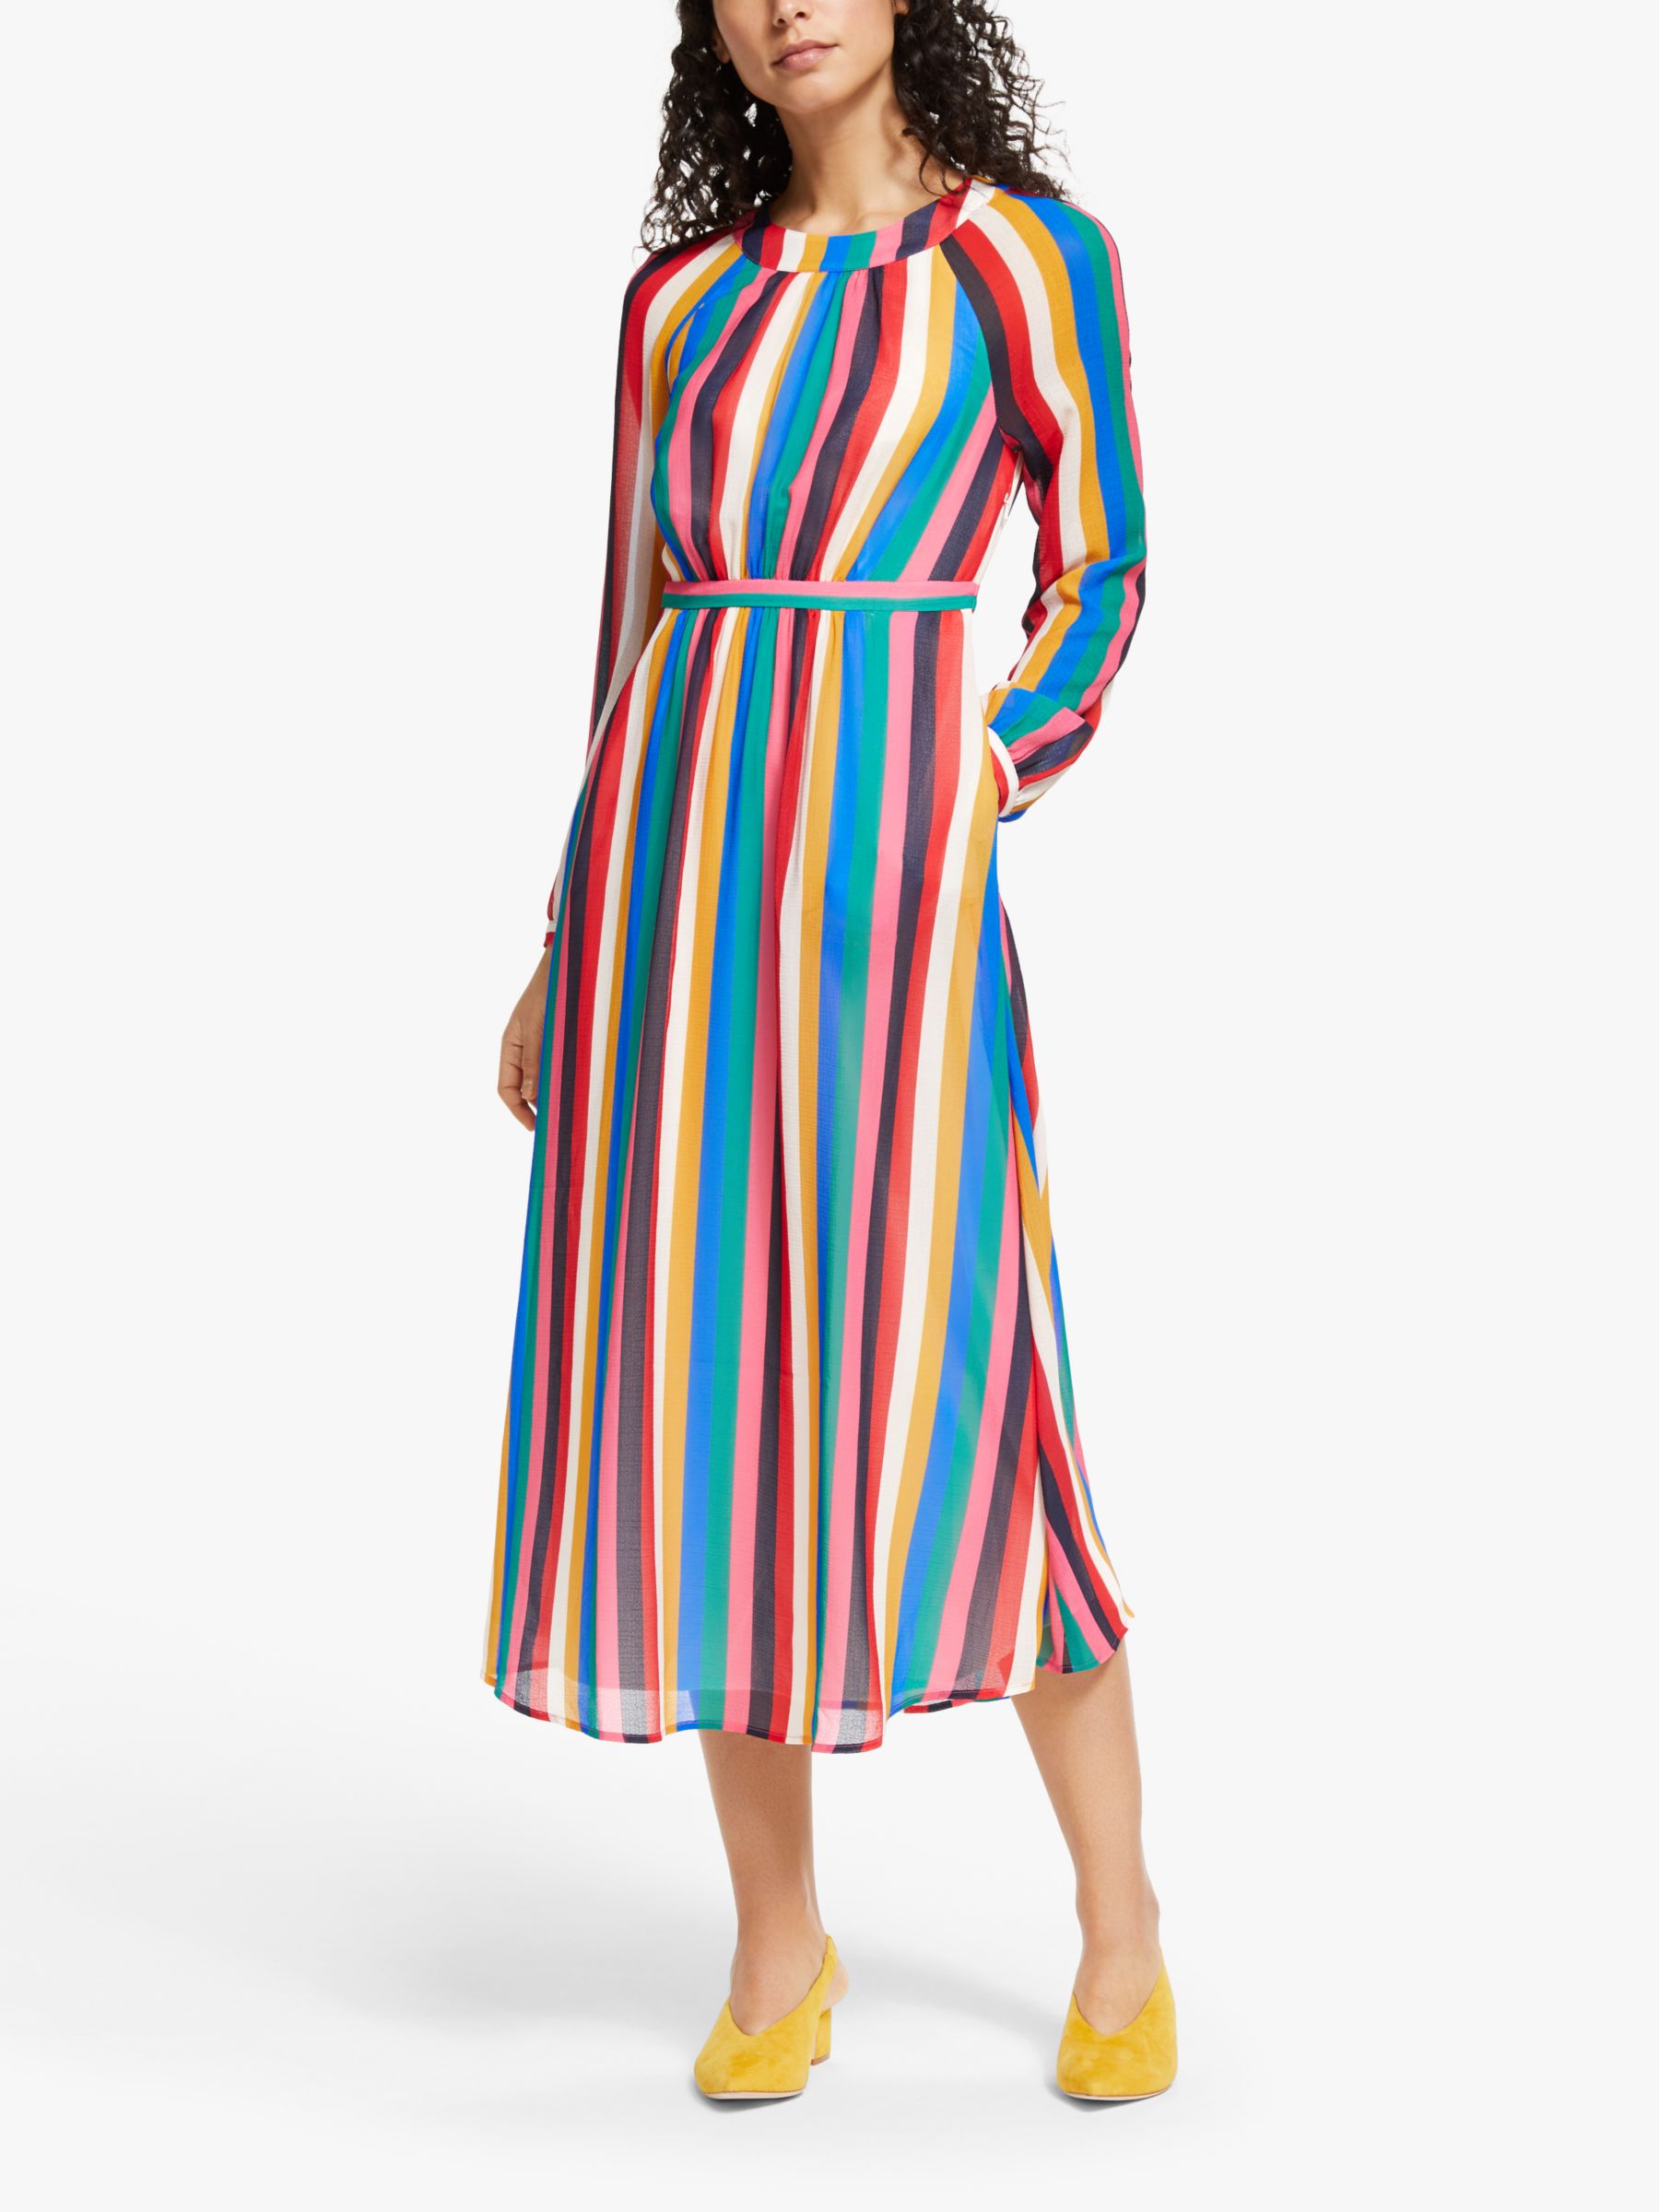 Boden Erica Rainbow Midi Dress, Multi